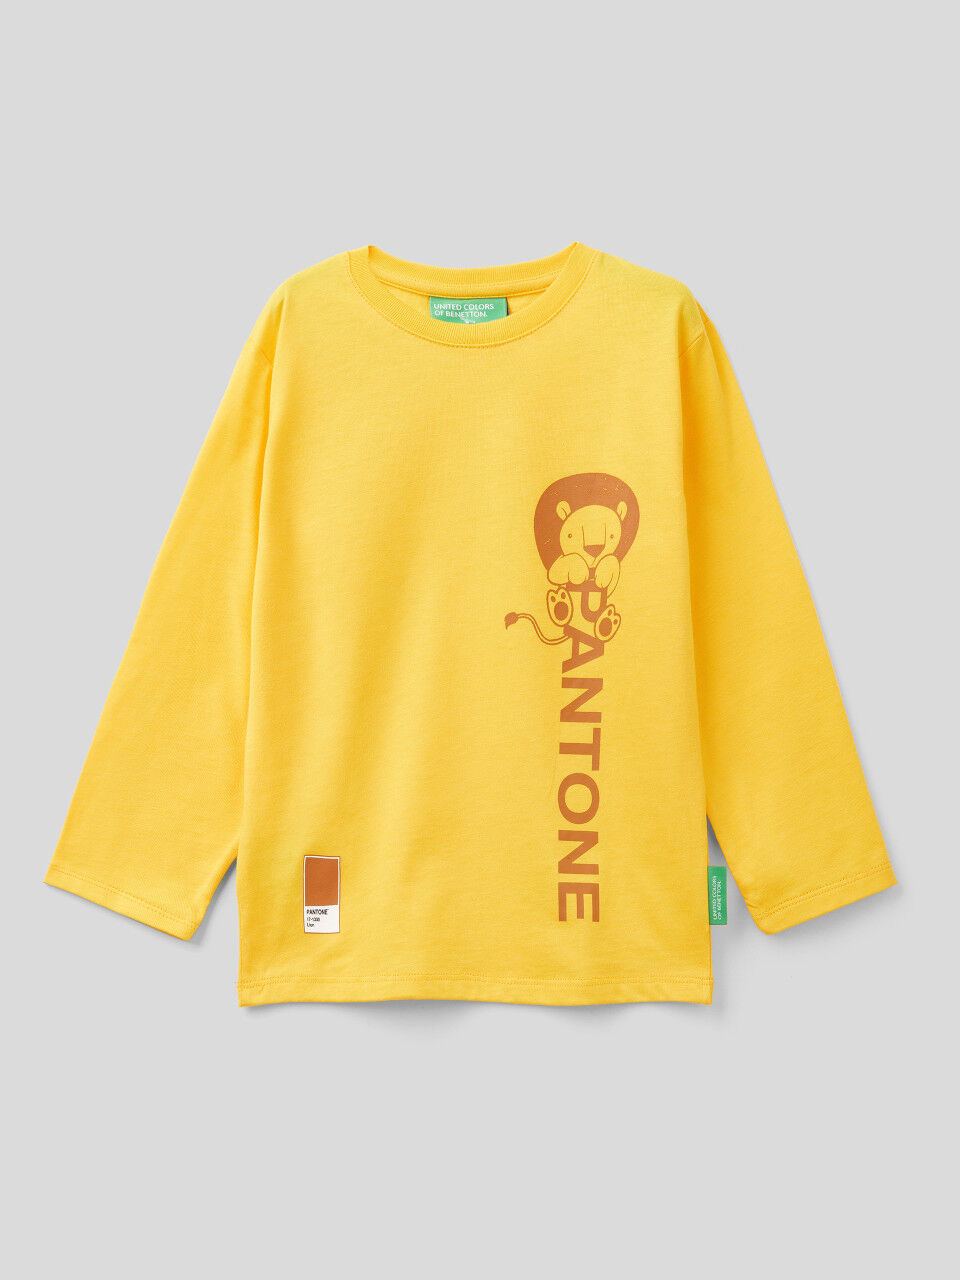 Camiseta amarilla BenettonxPantone™